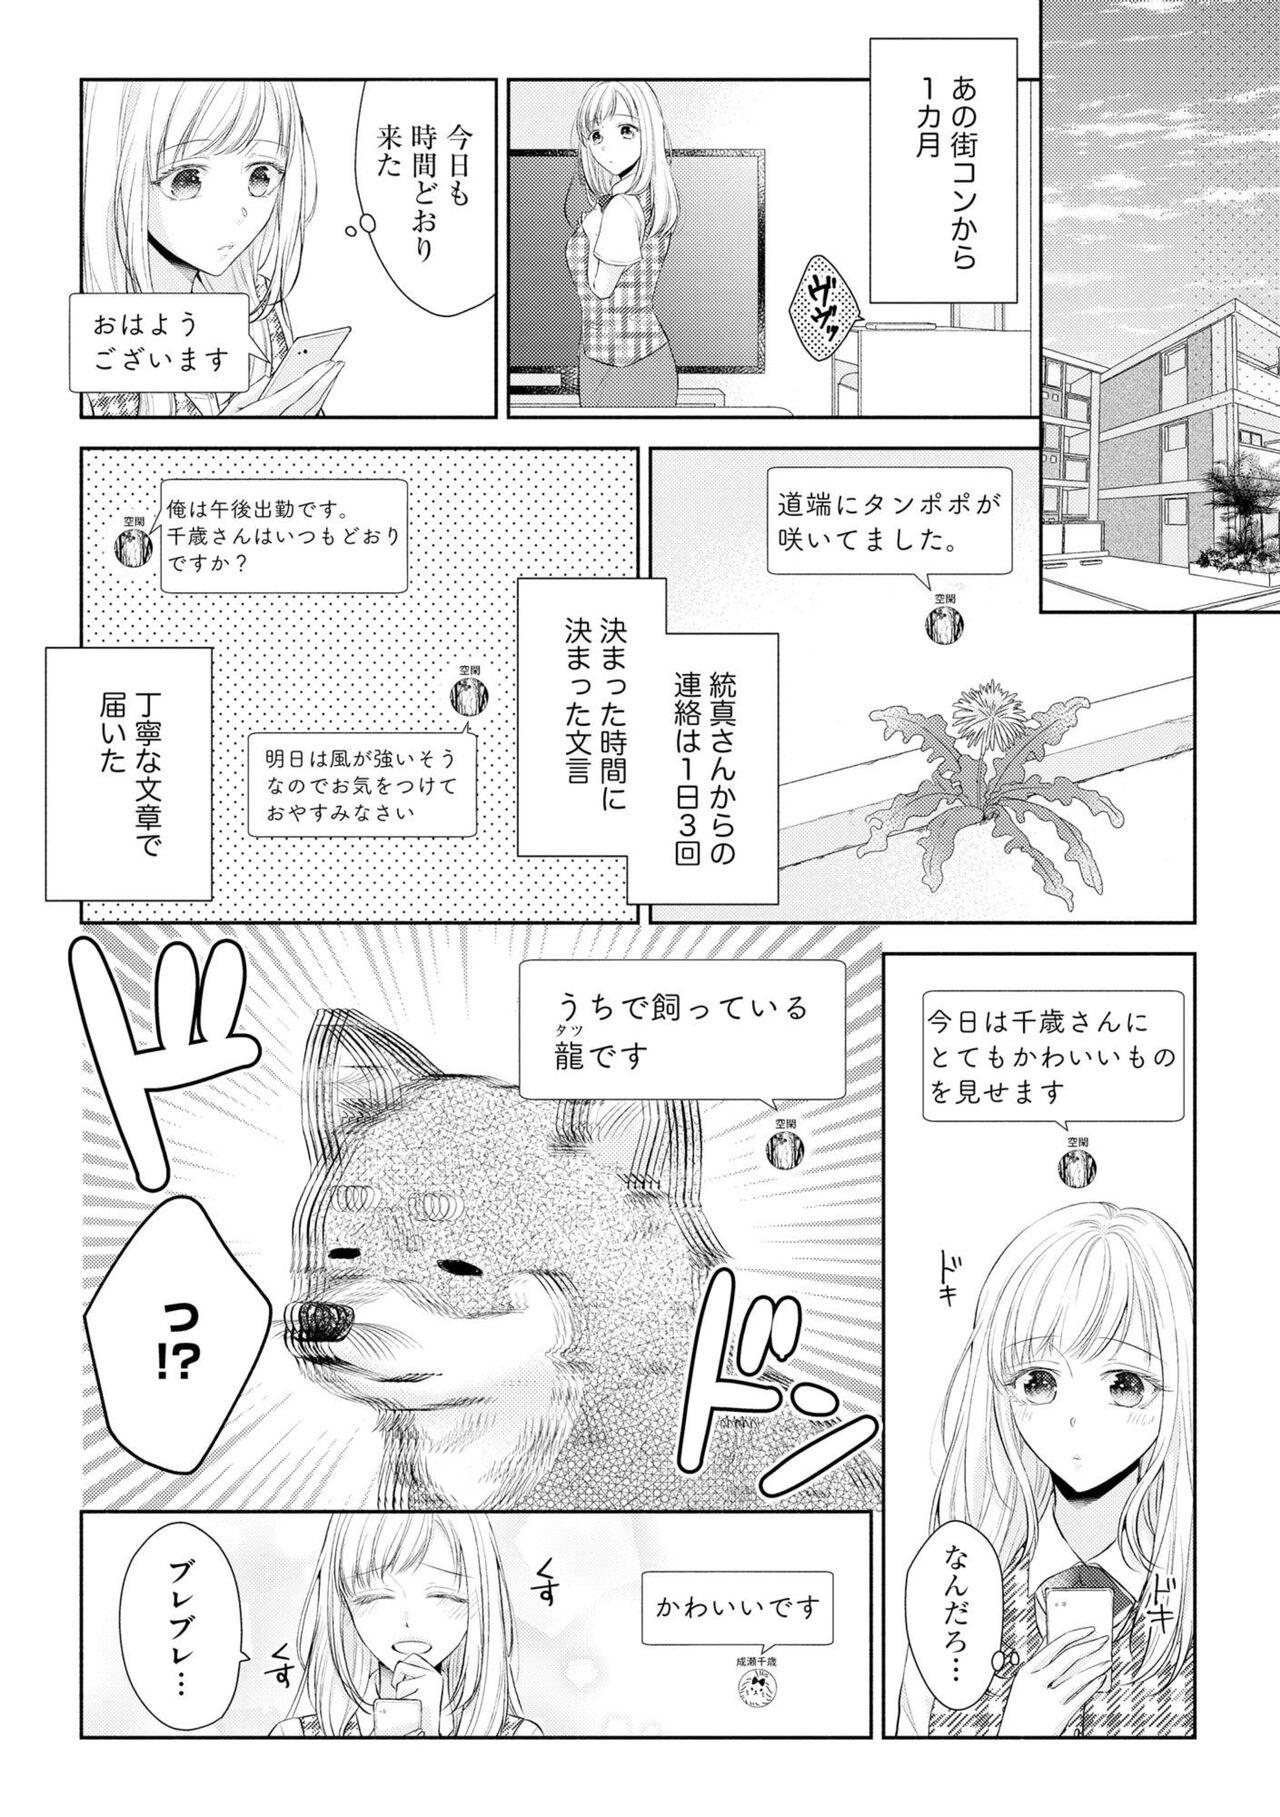 Banho Koibito wa Amakute Junjōna Yakuza-sama itto Ecchi wa oku made Torotoro 1 Perverted - Page 10